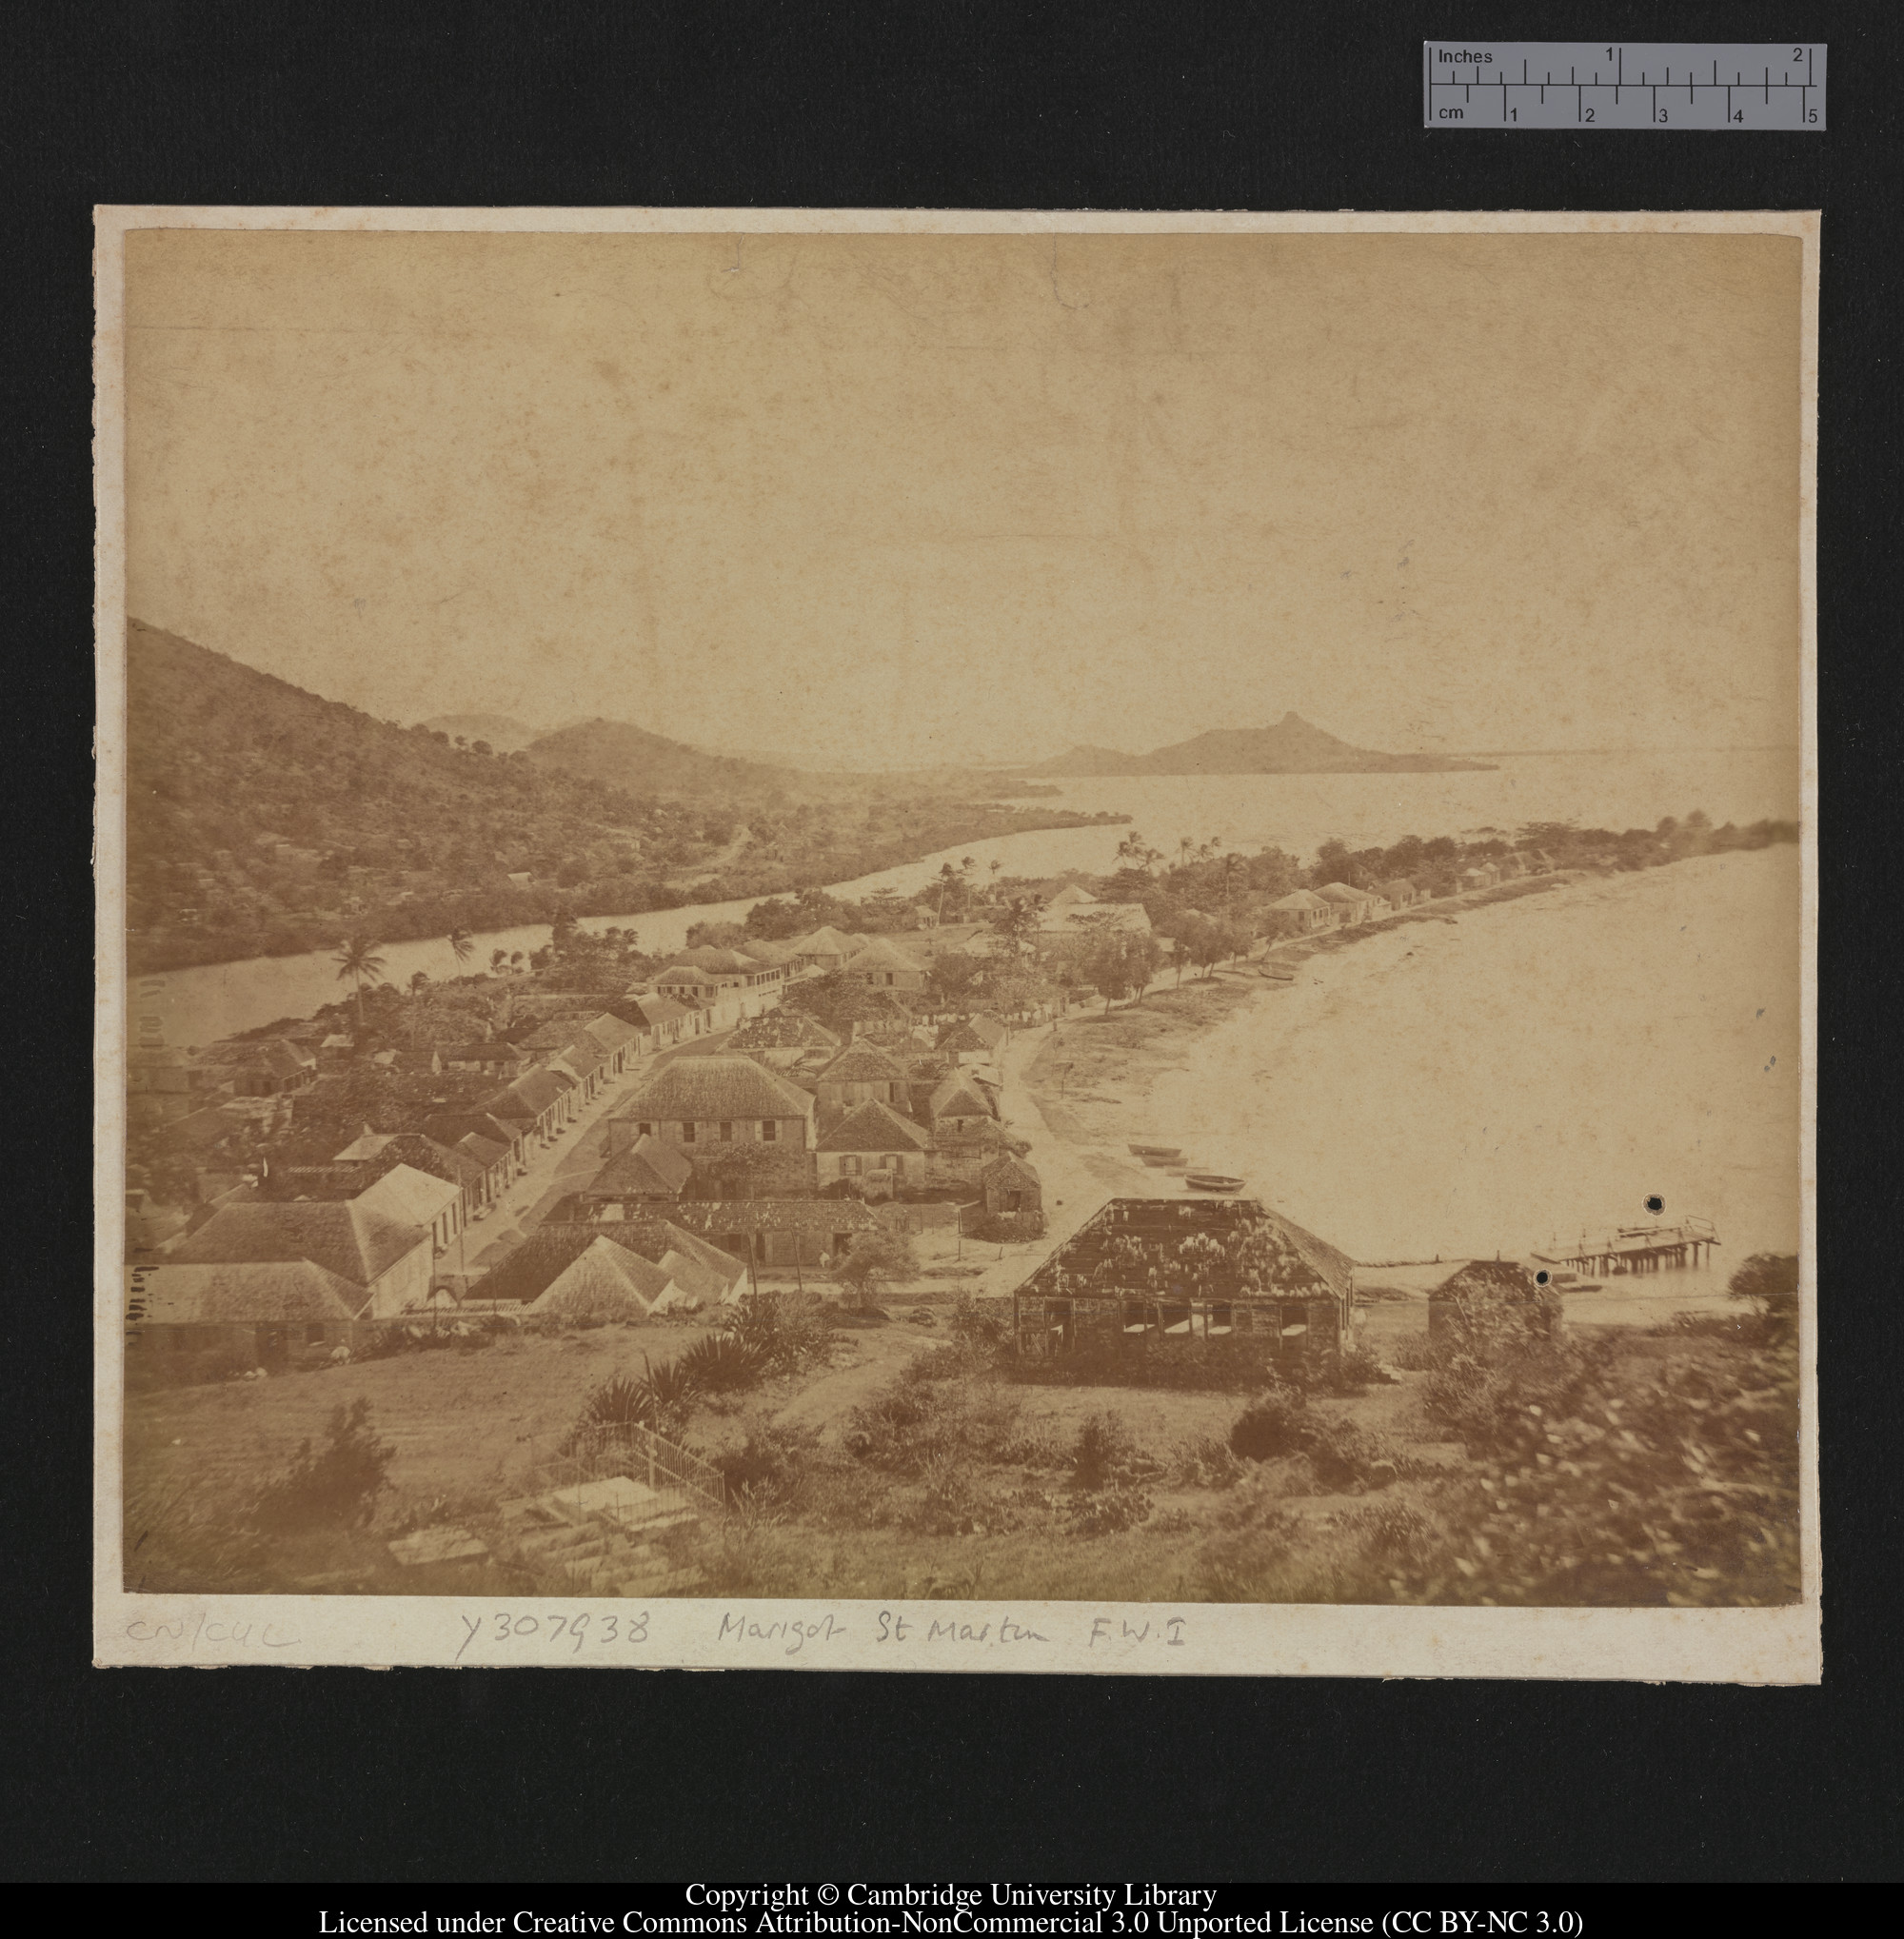 Marigot, St Martin, F.W.I. [i.e. Saint Martin, Antilles francaises], 1879 - 1913